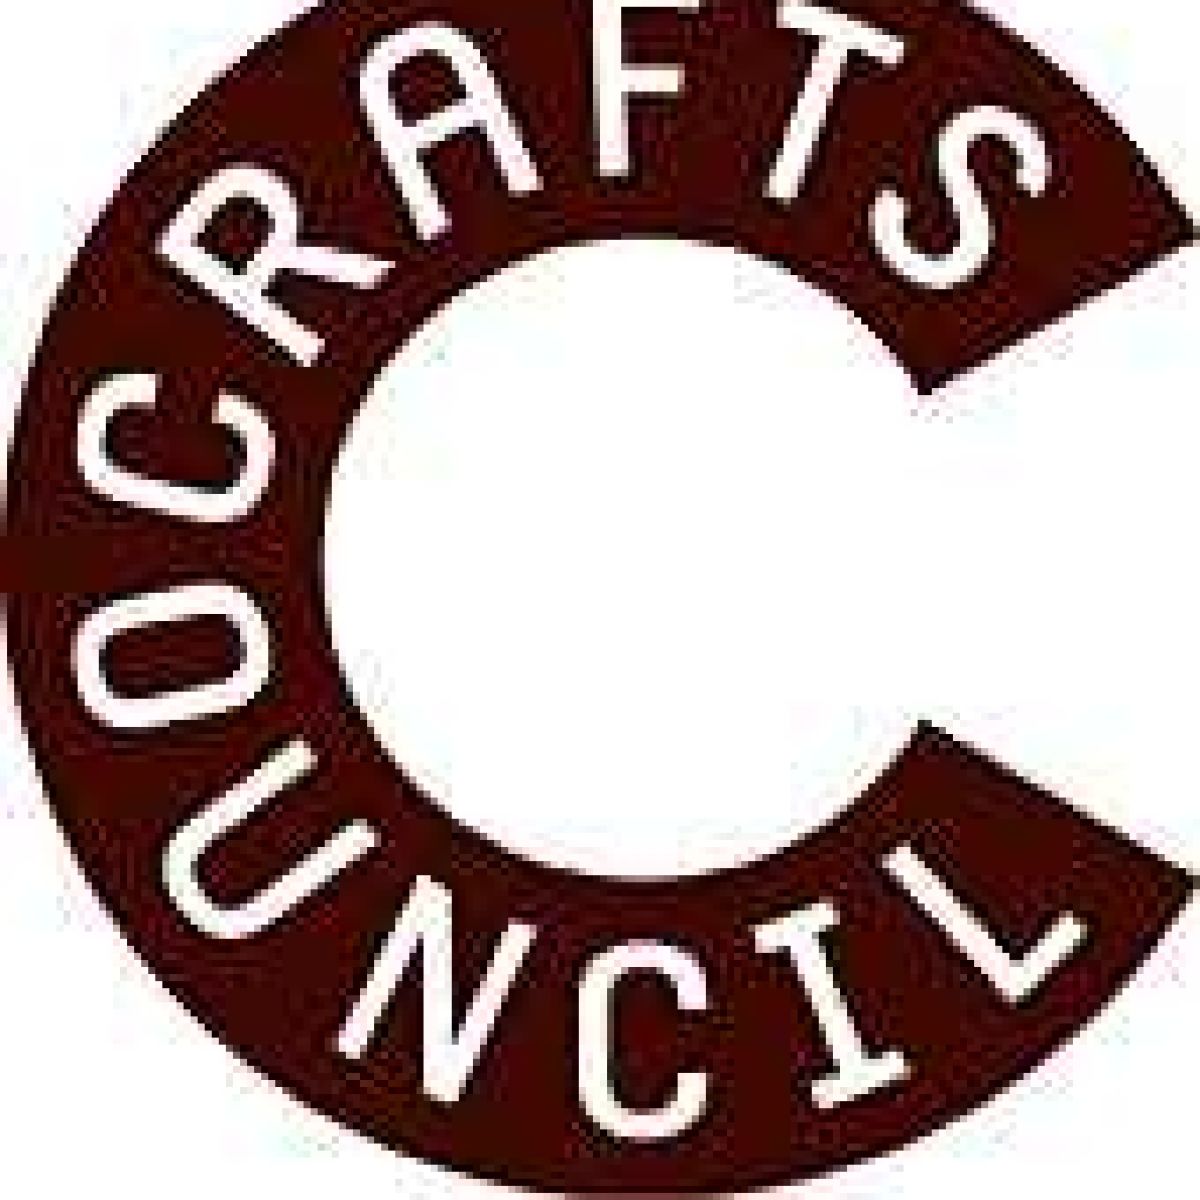 Crafts Council